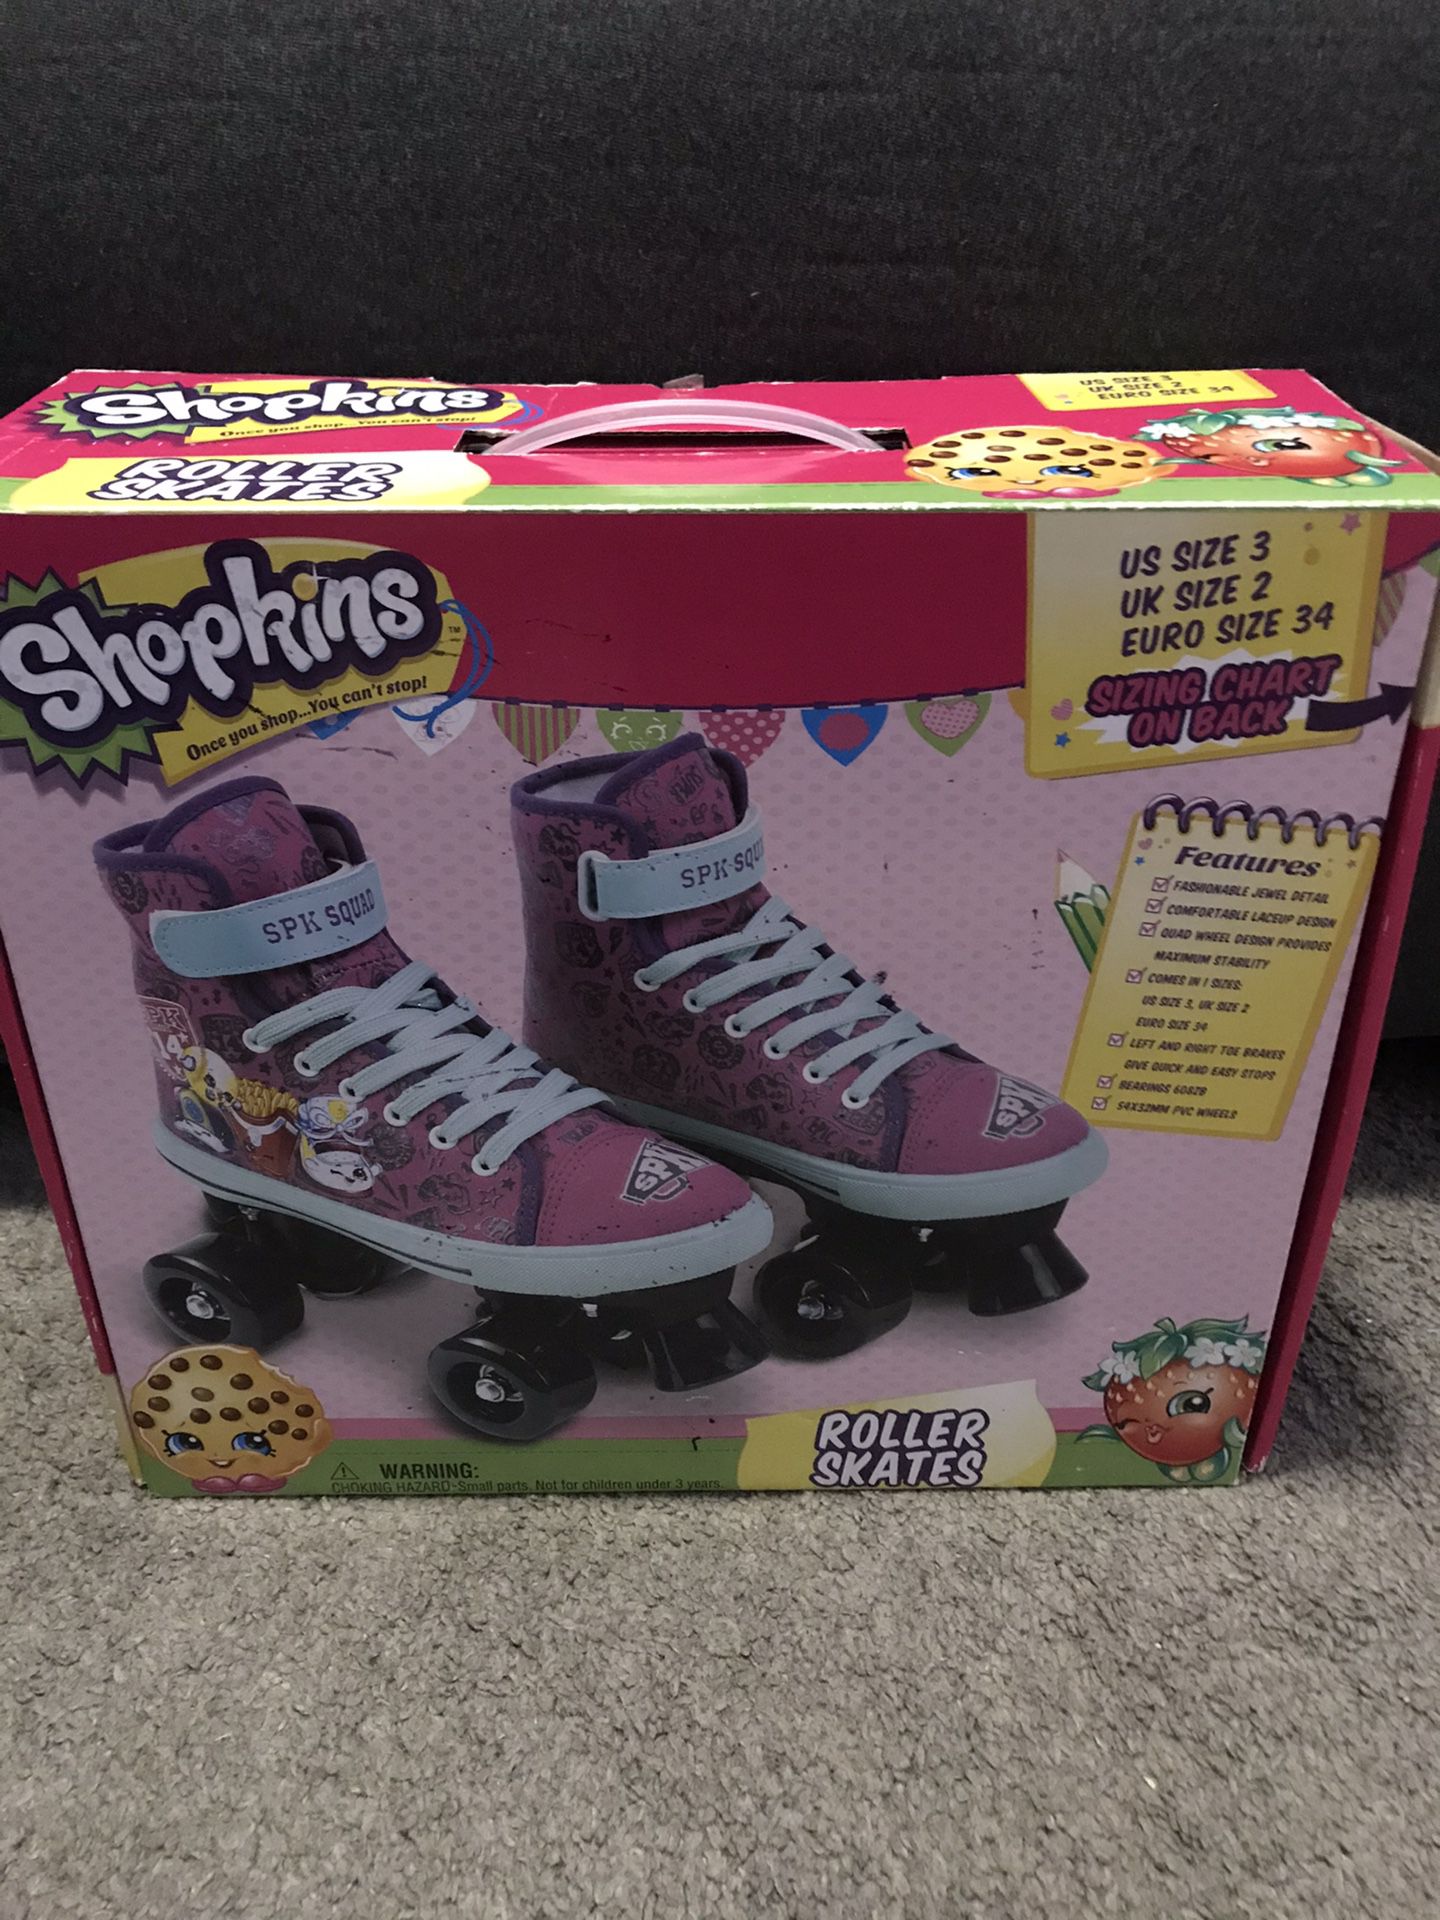 Girls Shopkins Roller Skates Size 3 OBO